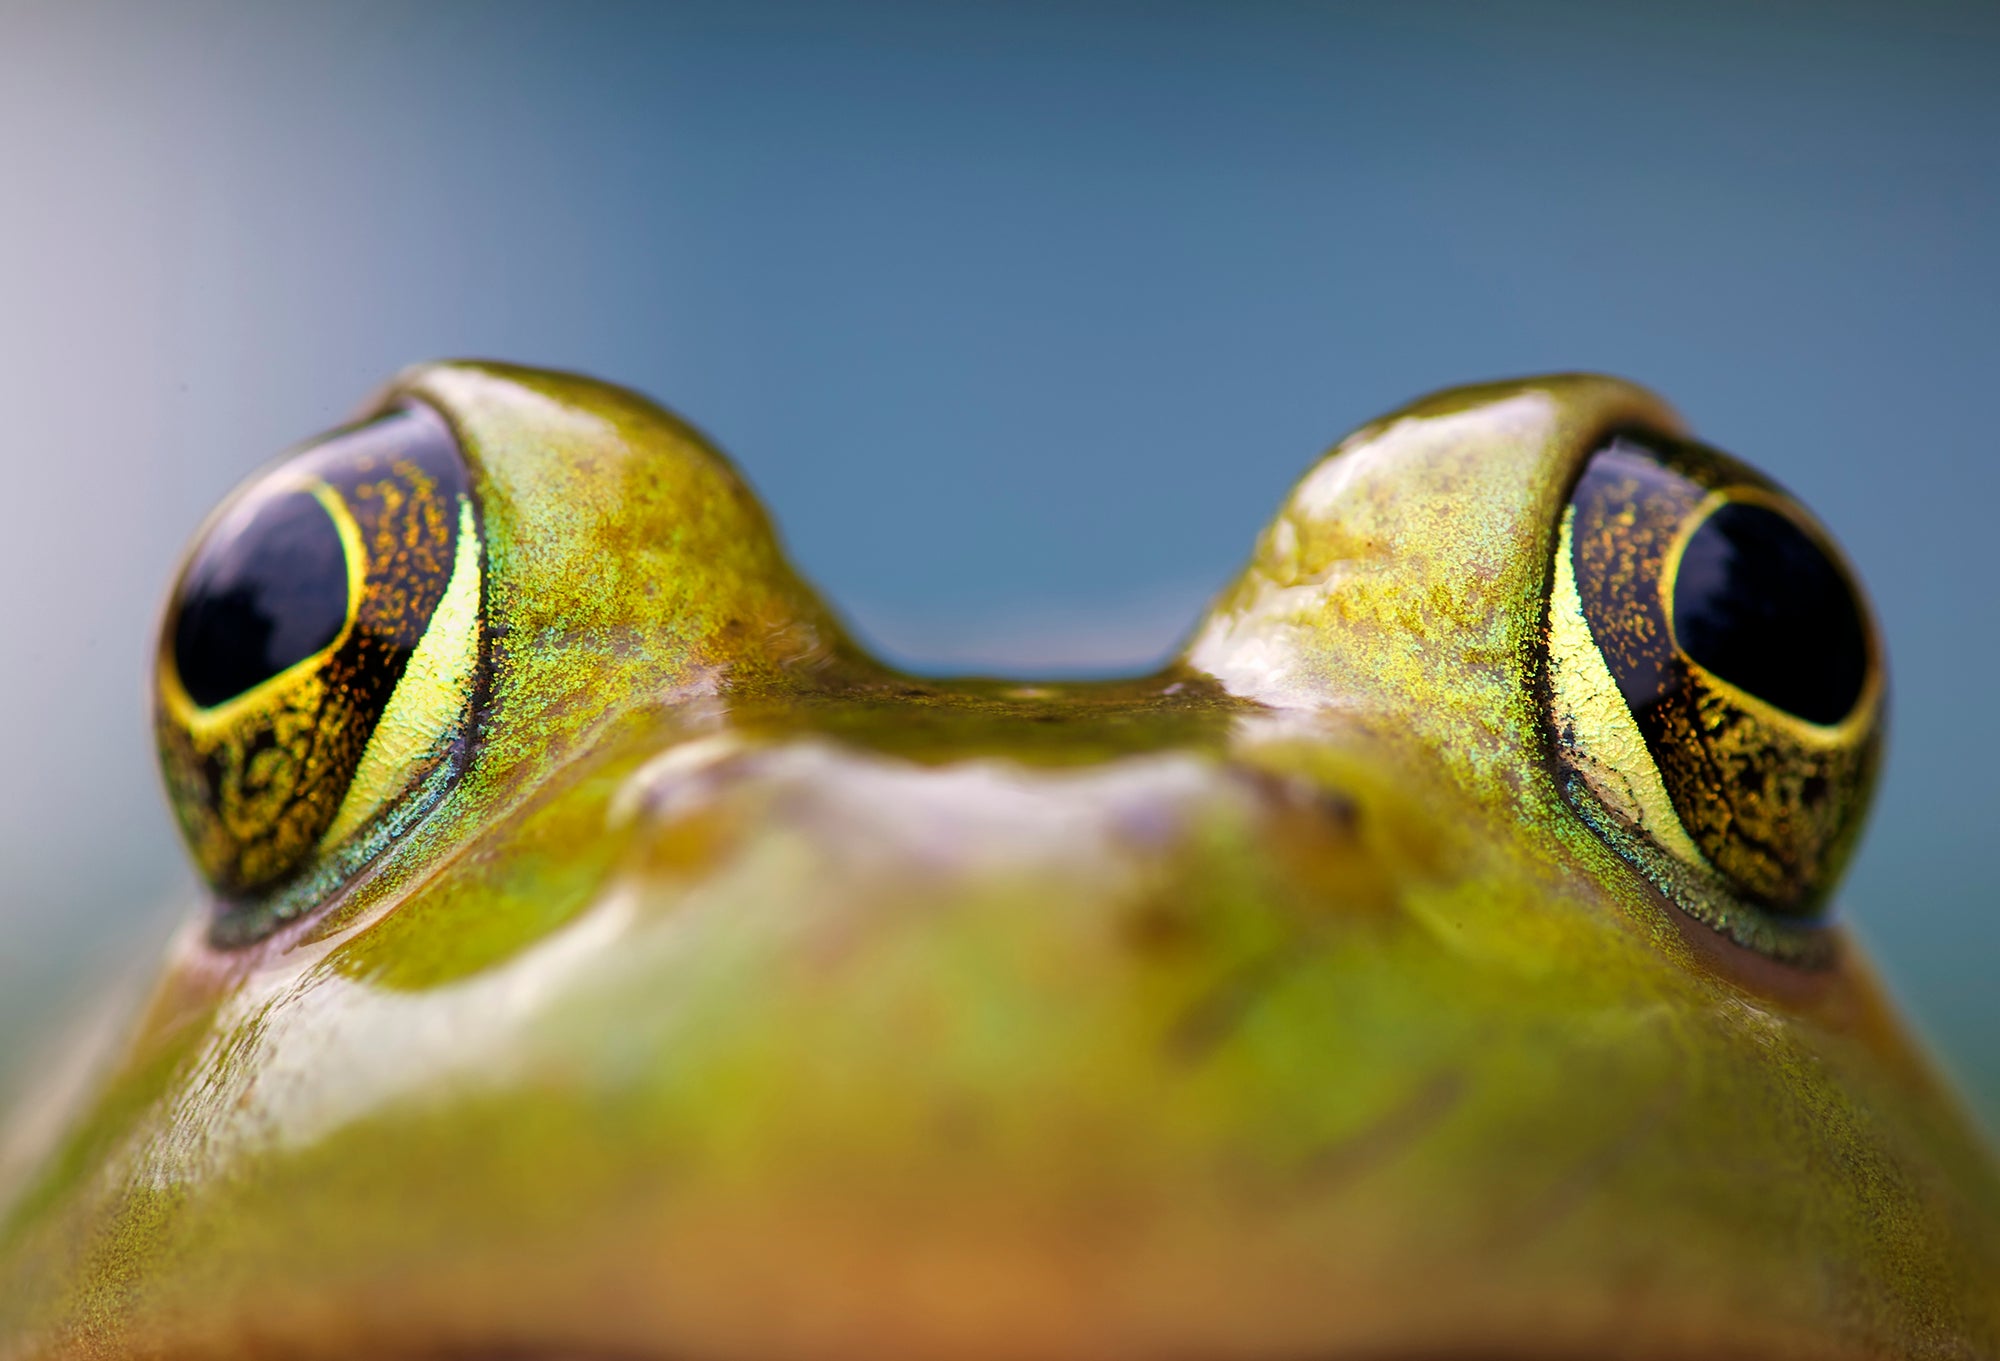 Frog Gigging: Nighttime Fun for Hot Summer Days